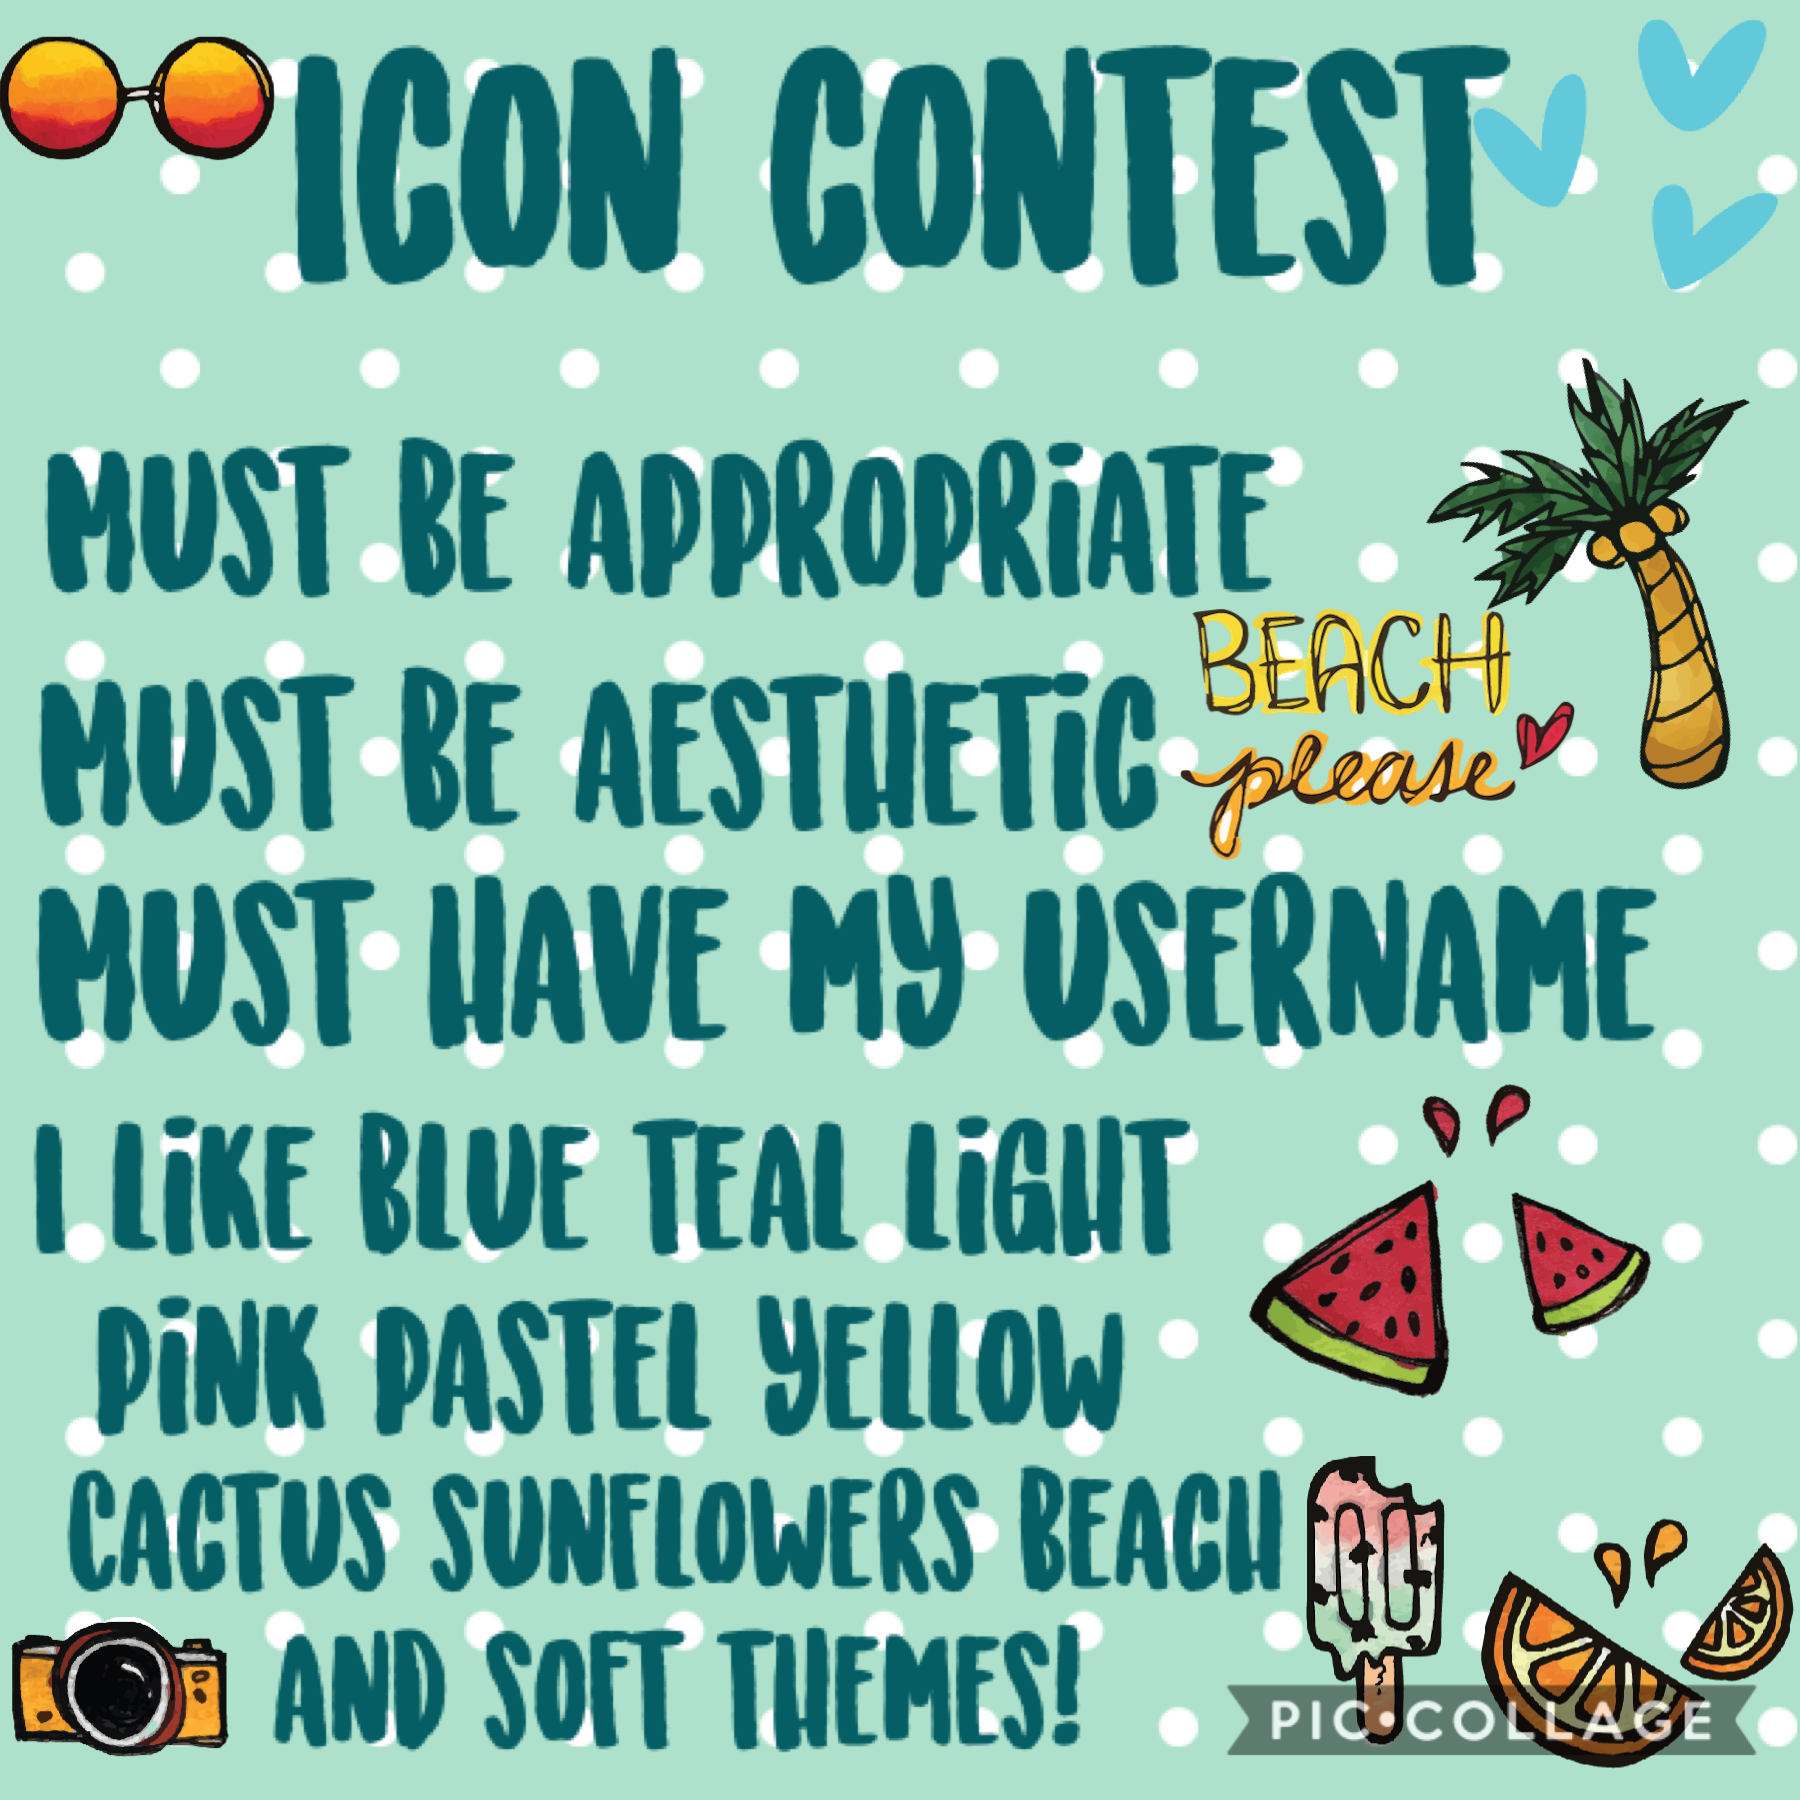 Icon contest good luck